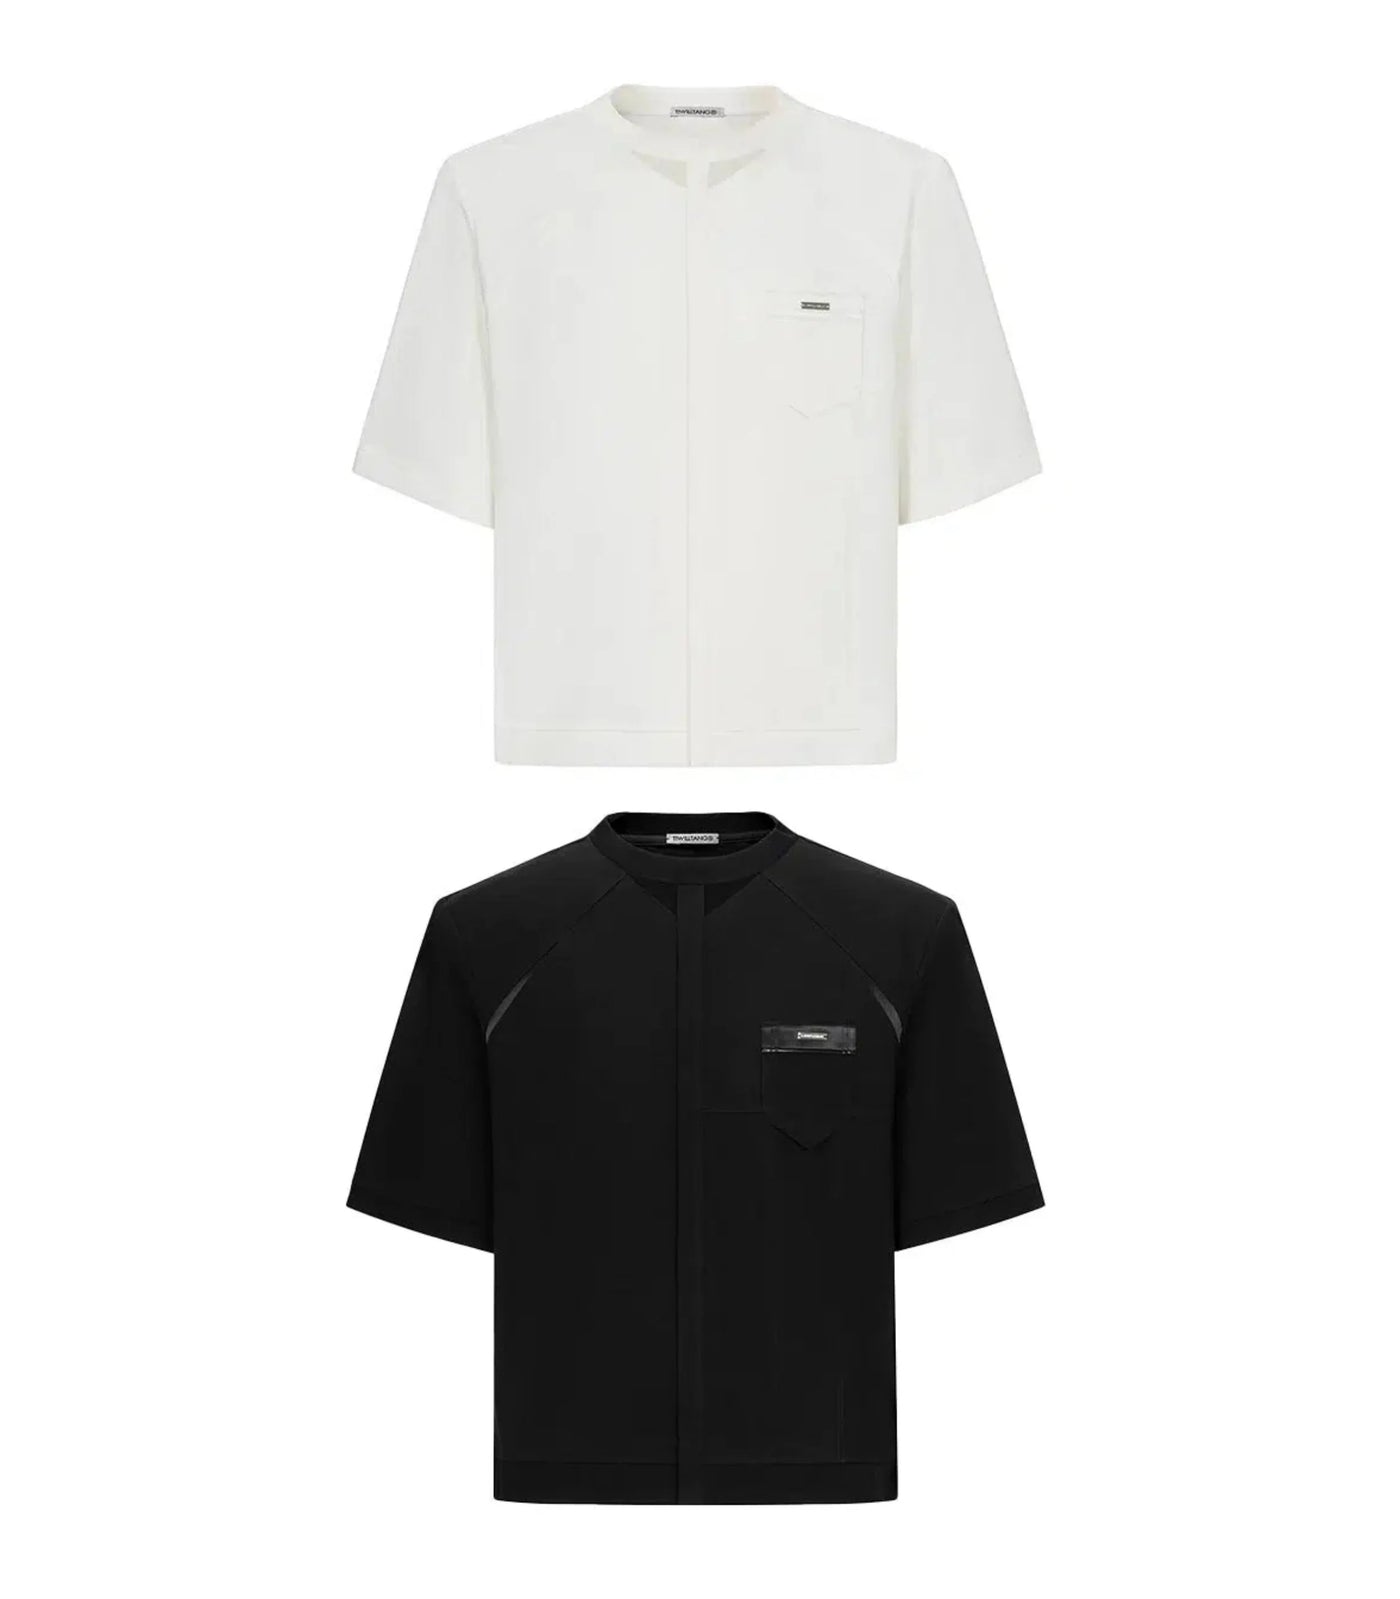 Structured Modern Layer T-Shirt Korean Street Fashion T-Shirt By TIWILLTANG Shop Online at OH Vault